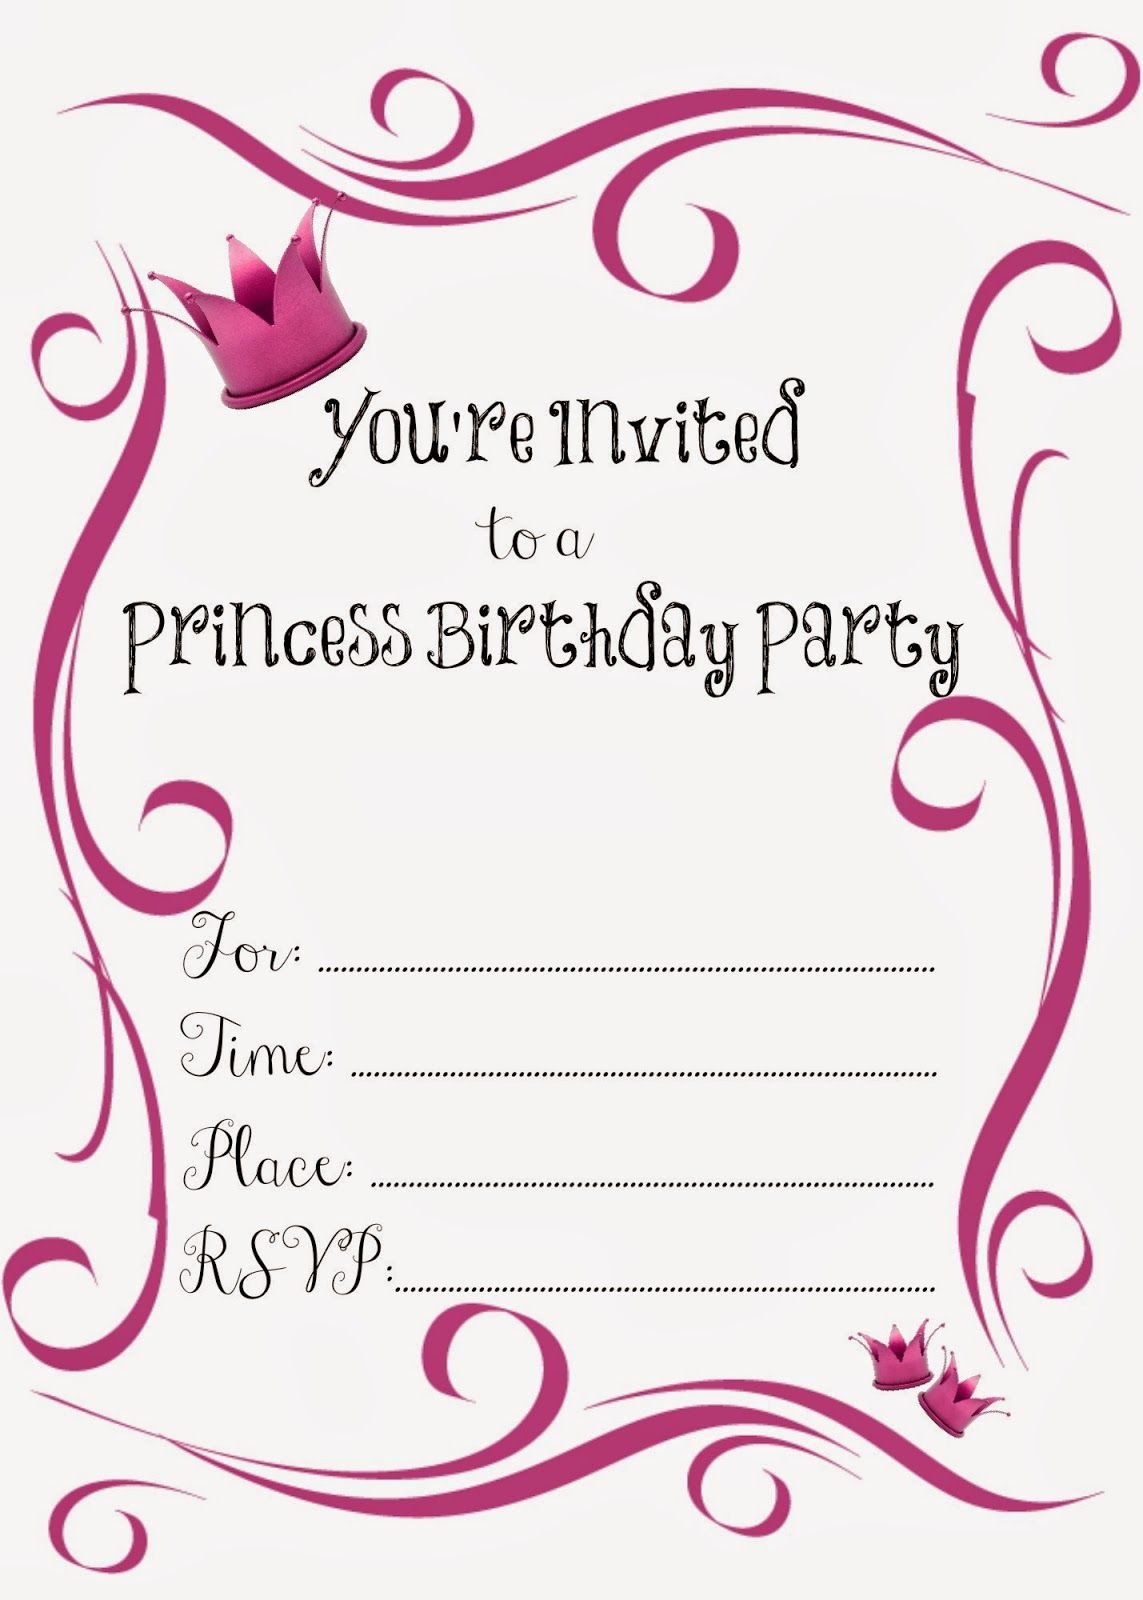 Free Printable Princess Birthday Party Invitations #freeprintables - Free Printable Birthday Party Invitations With Photo